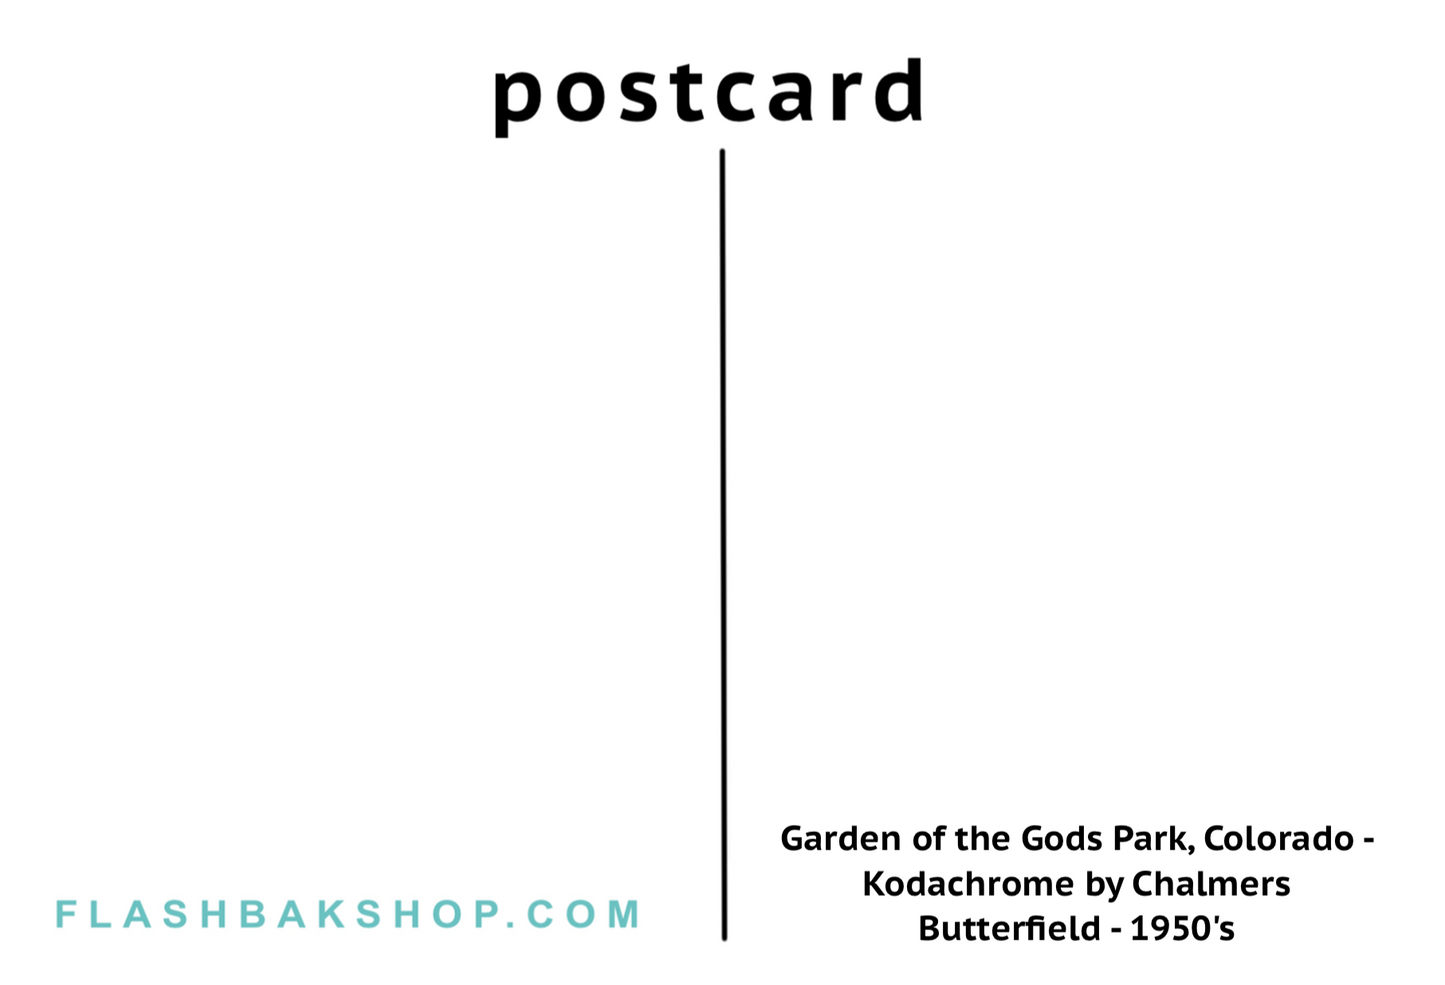 Garden of the Gods Park, Colorado - Kodachrome de Chalmers Butterfield, años 50 - Postal